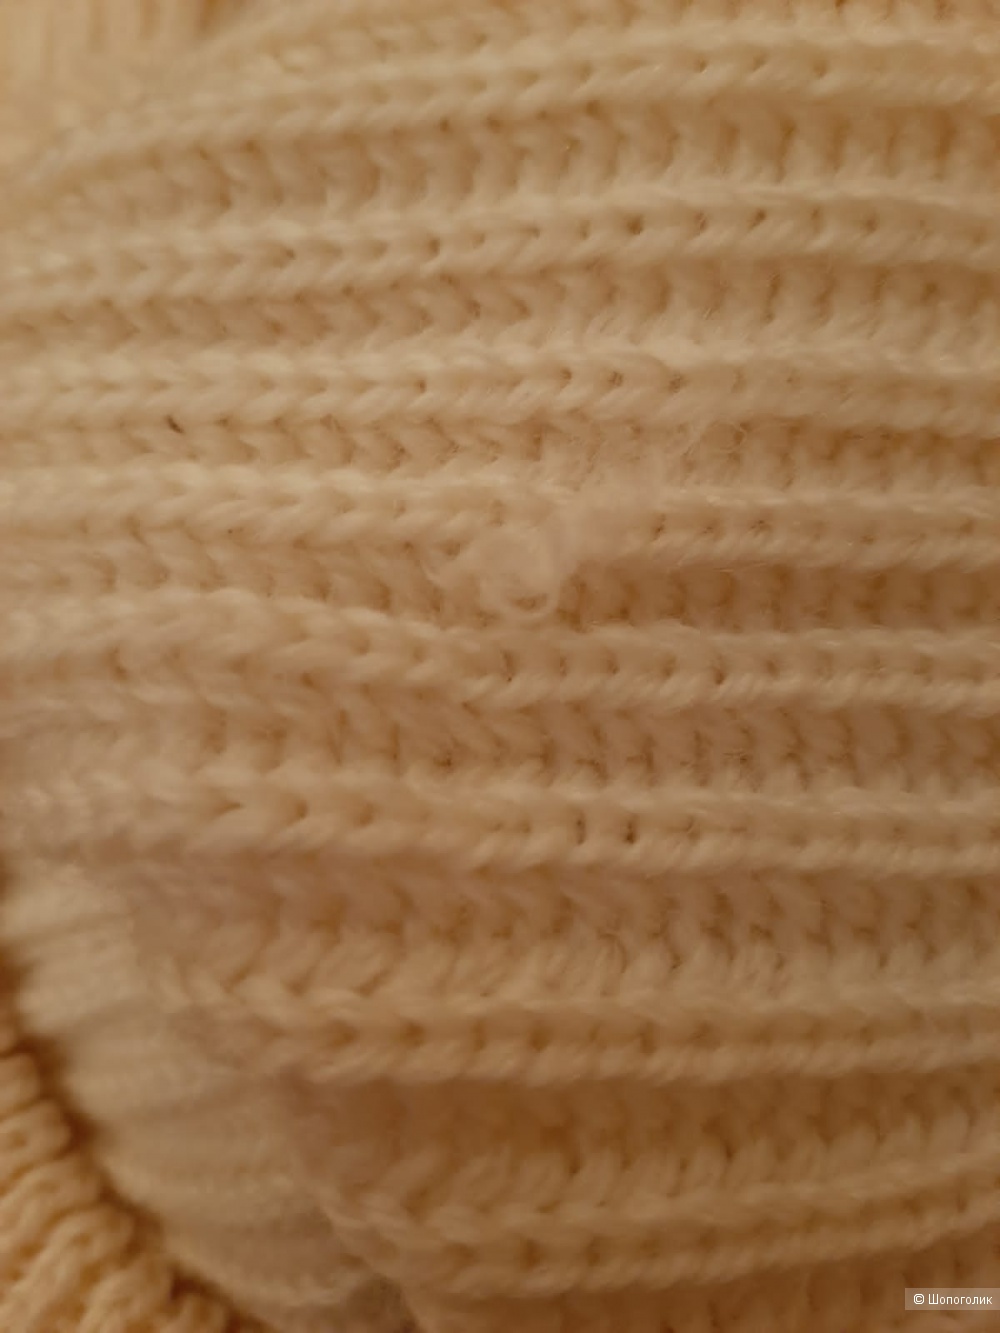 Джемпер Wool Overs размер 42/44